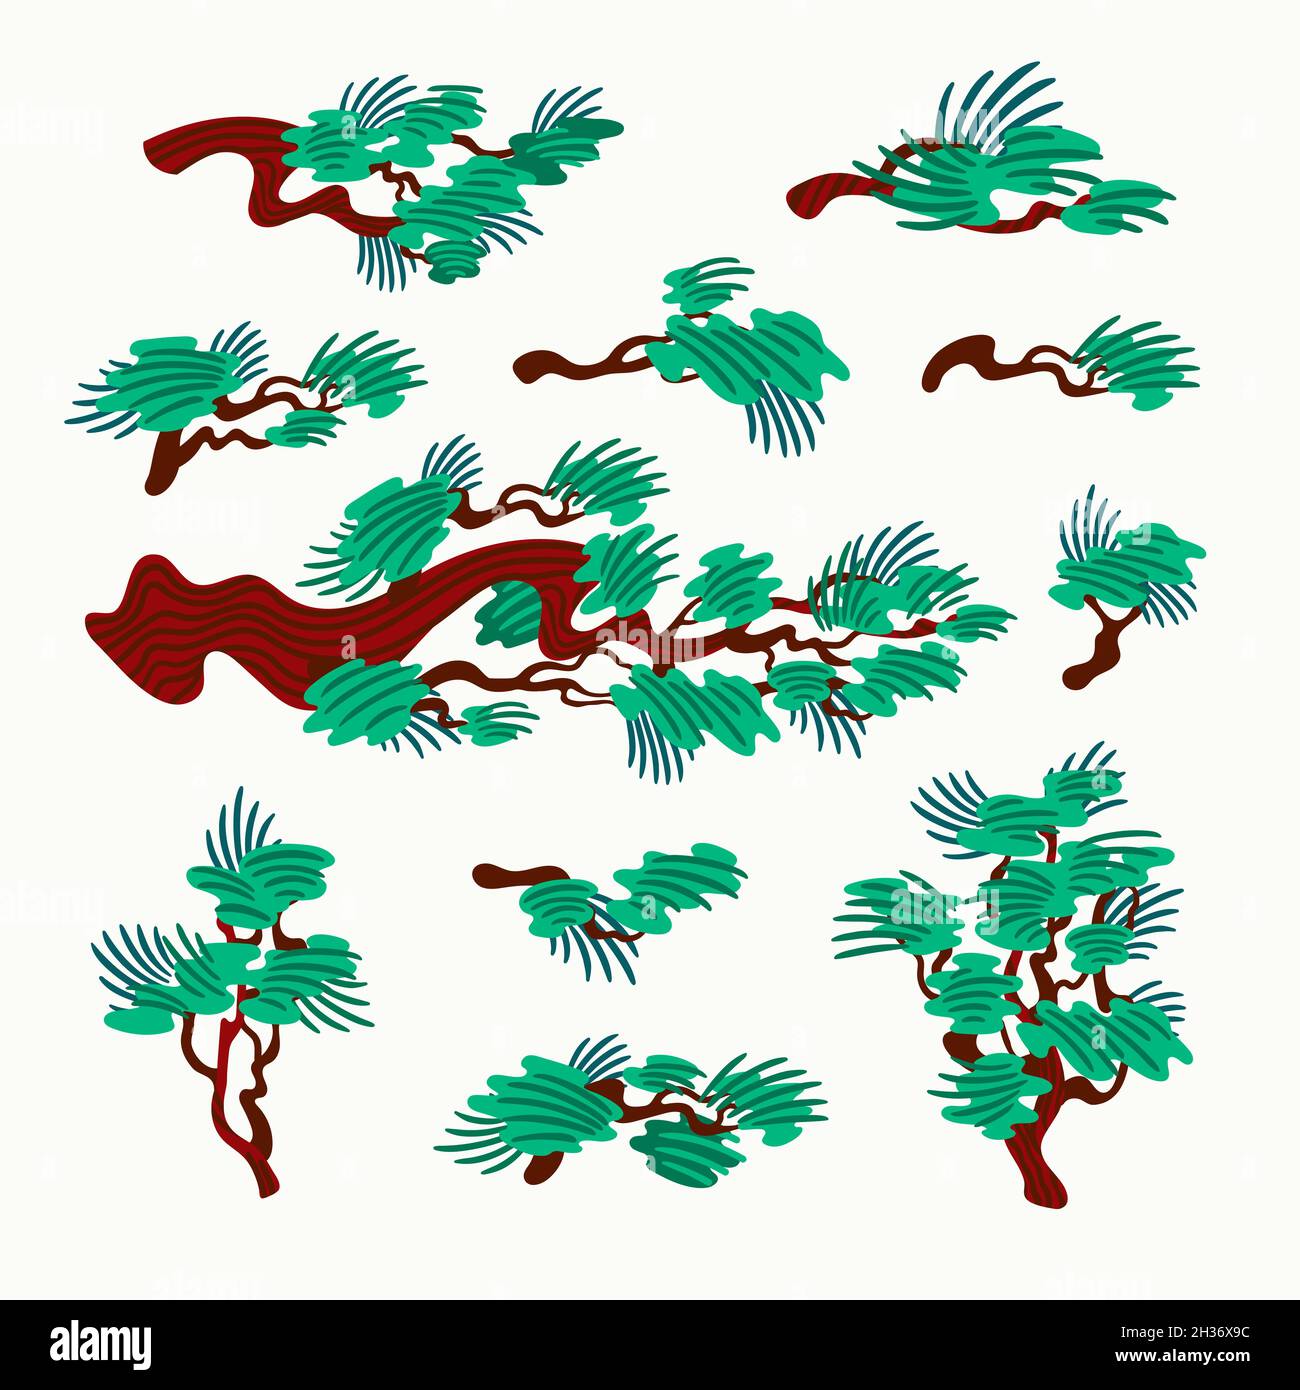 Japanese pine tree. Organic flat style vector illustration on white background. Stock Vector